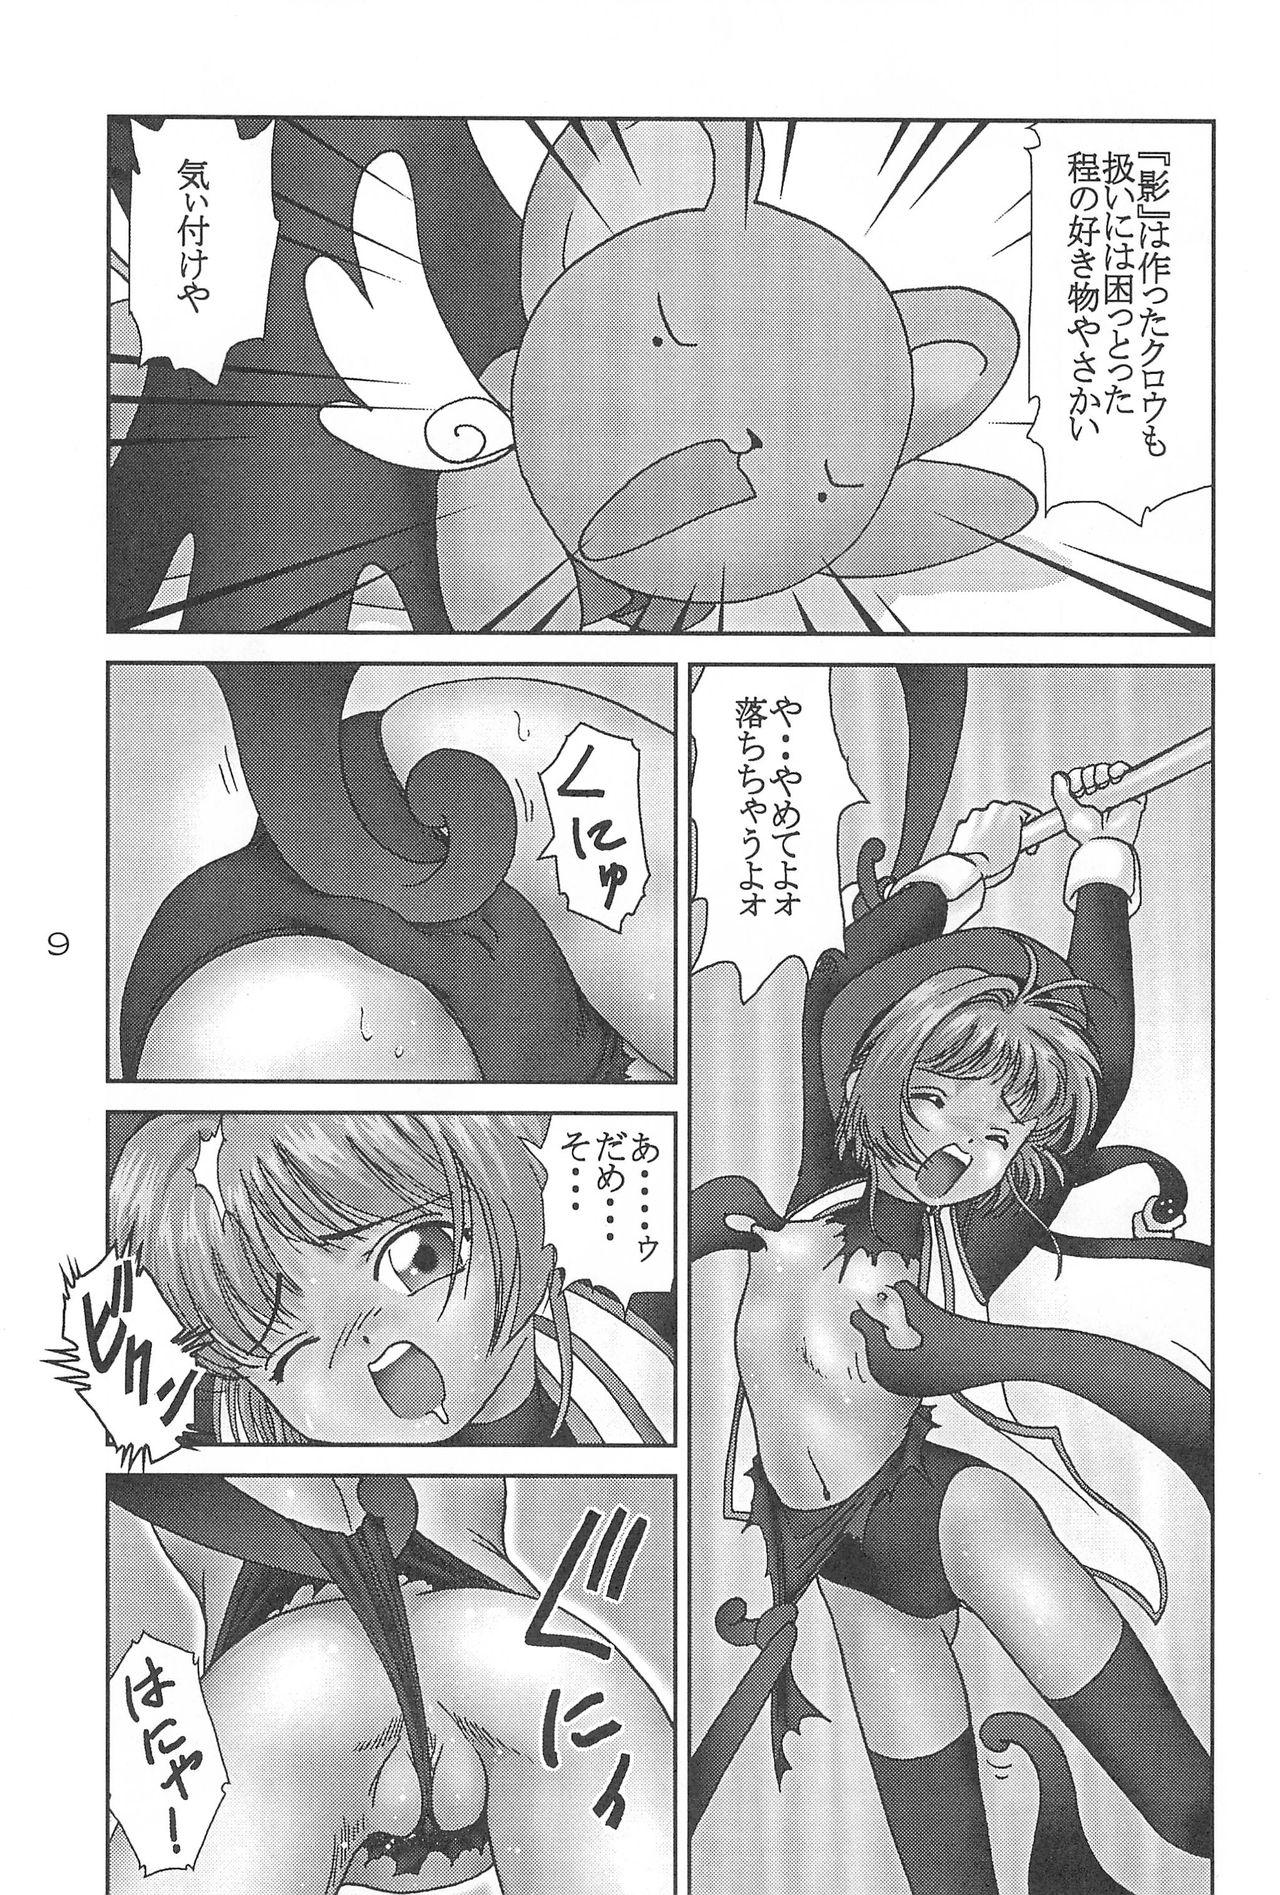 Chica Cerise 2 - Cardcaptor sakura Pack - Page 9